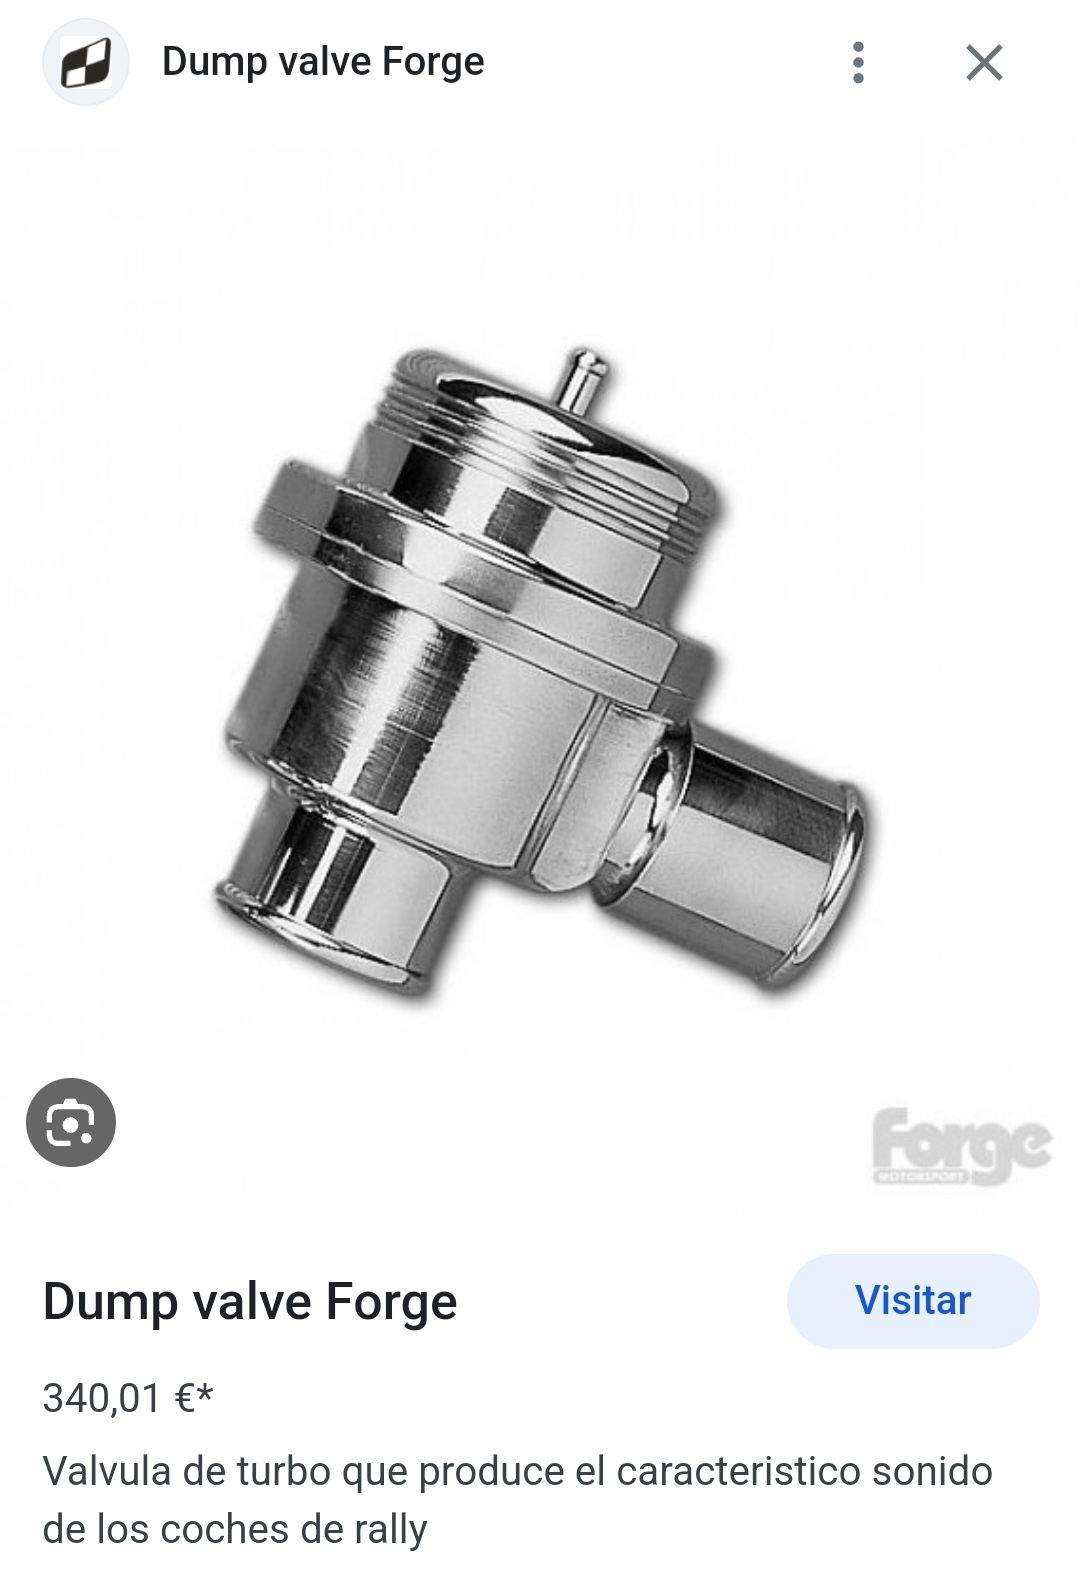 Dump valve forge